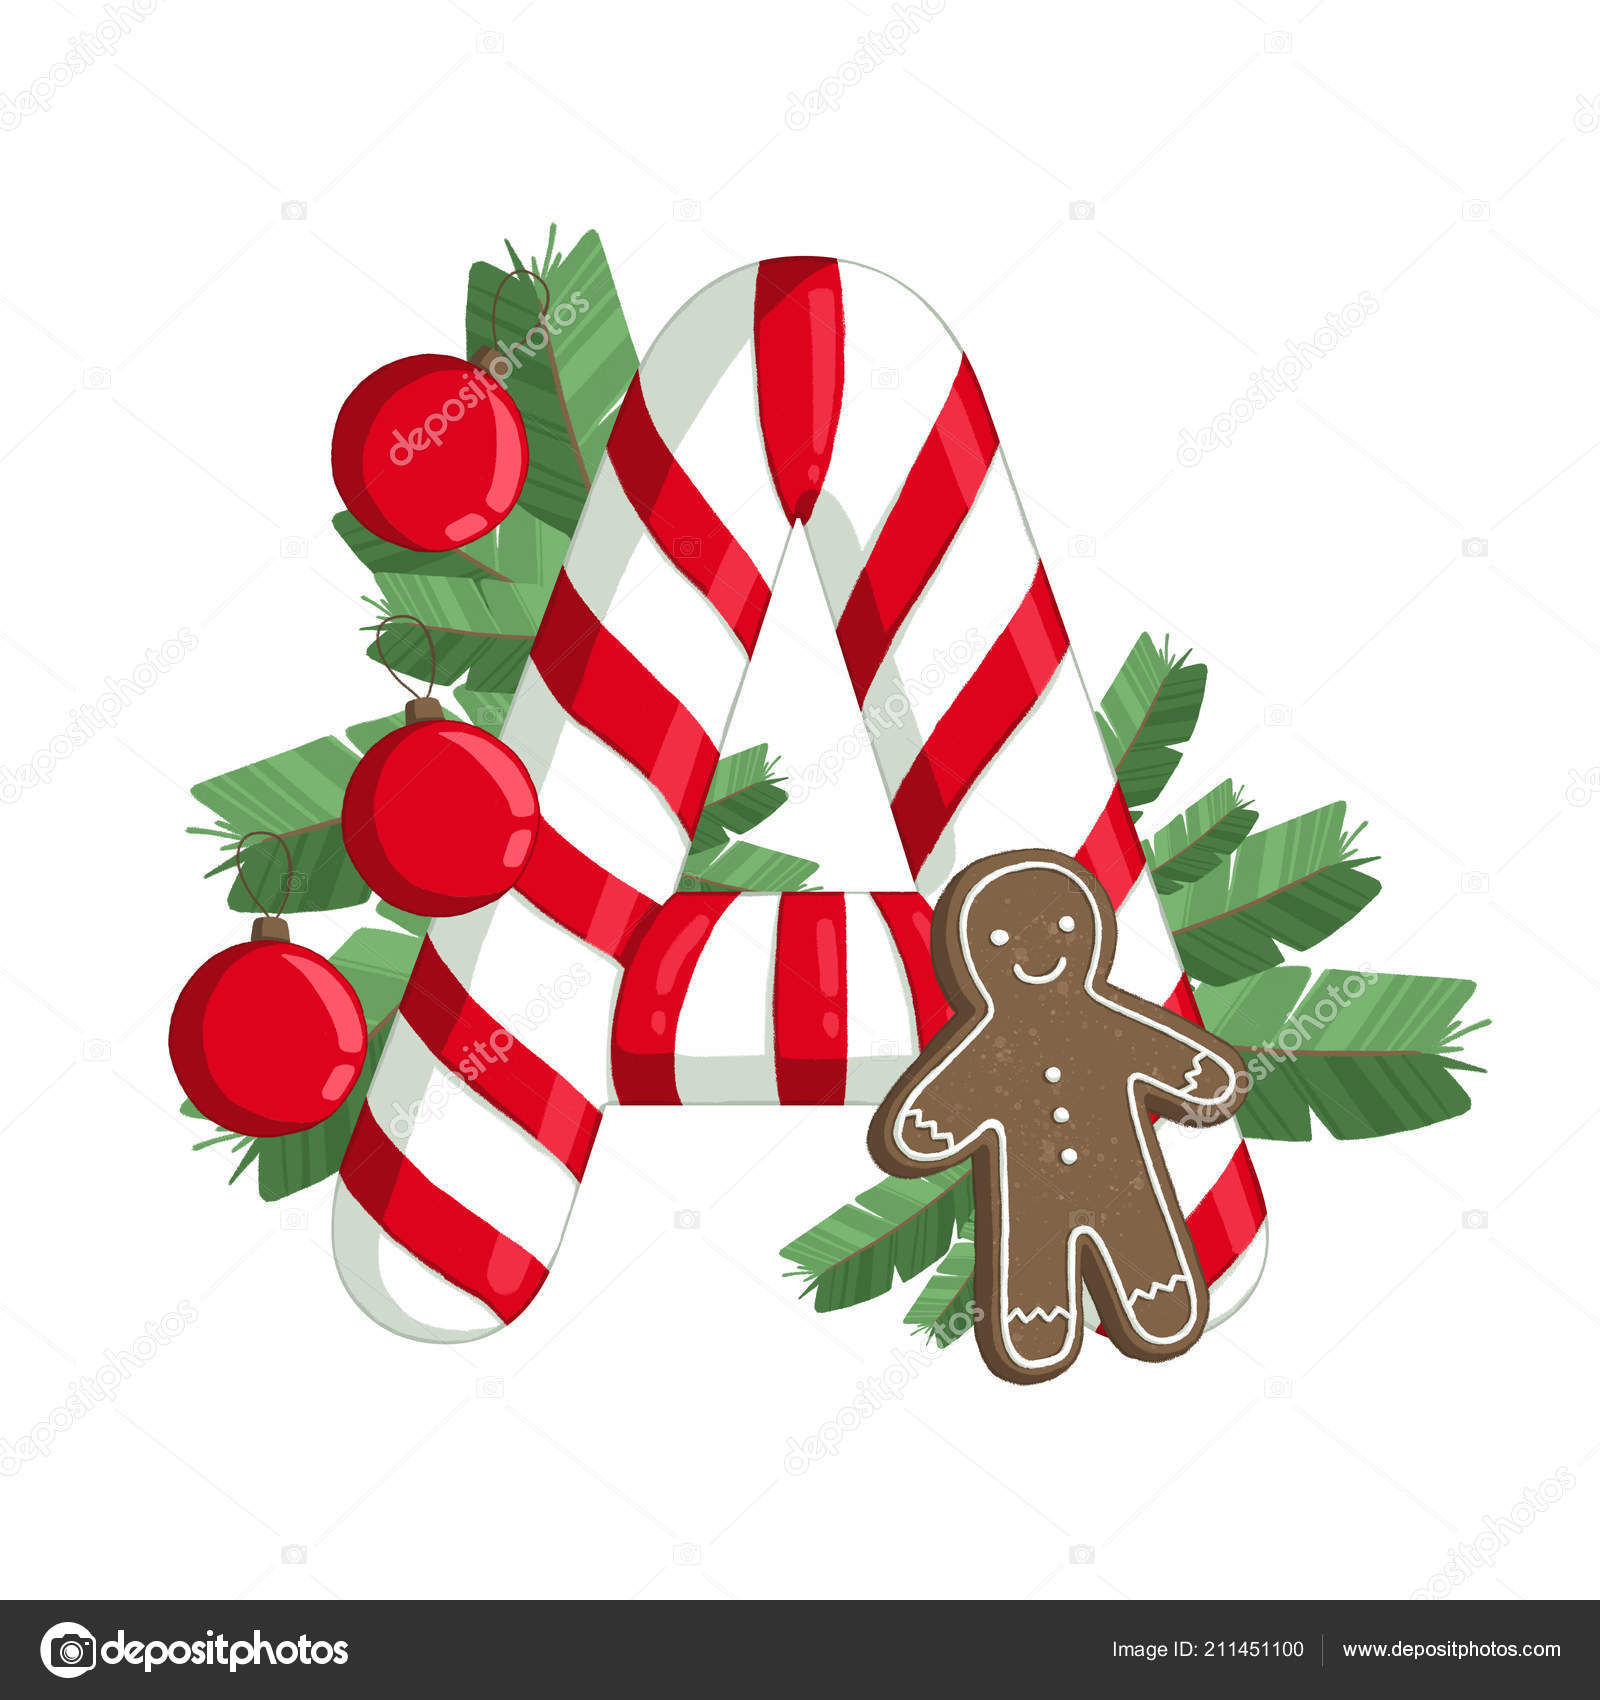 https://st4.depositphotos.com/8990418/21145/i/1600/depositphotos_211451100-stock-illustration-christmas-alphabet-illustration-letter-tree.jpg